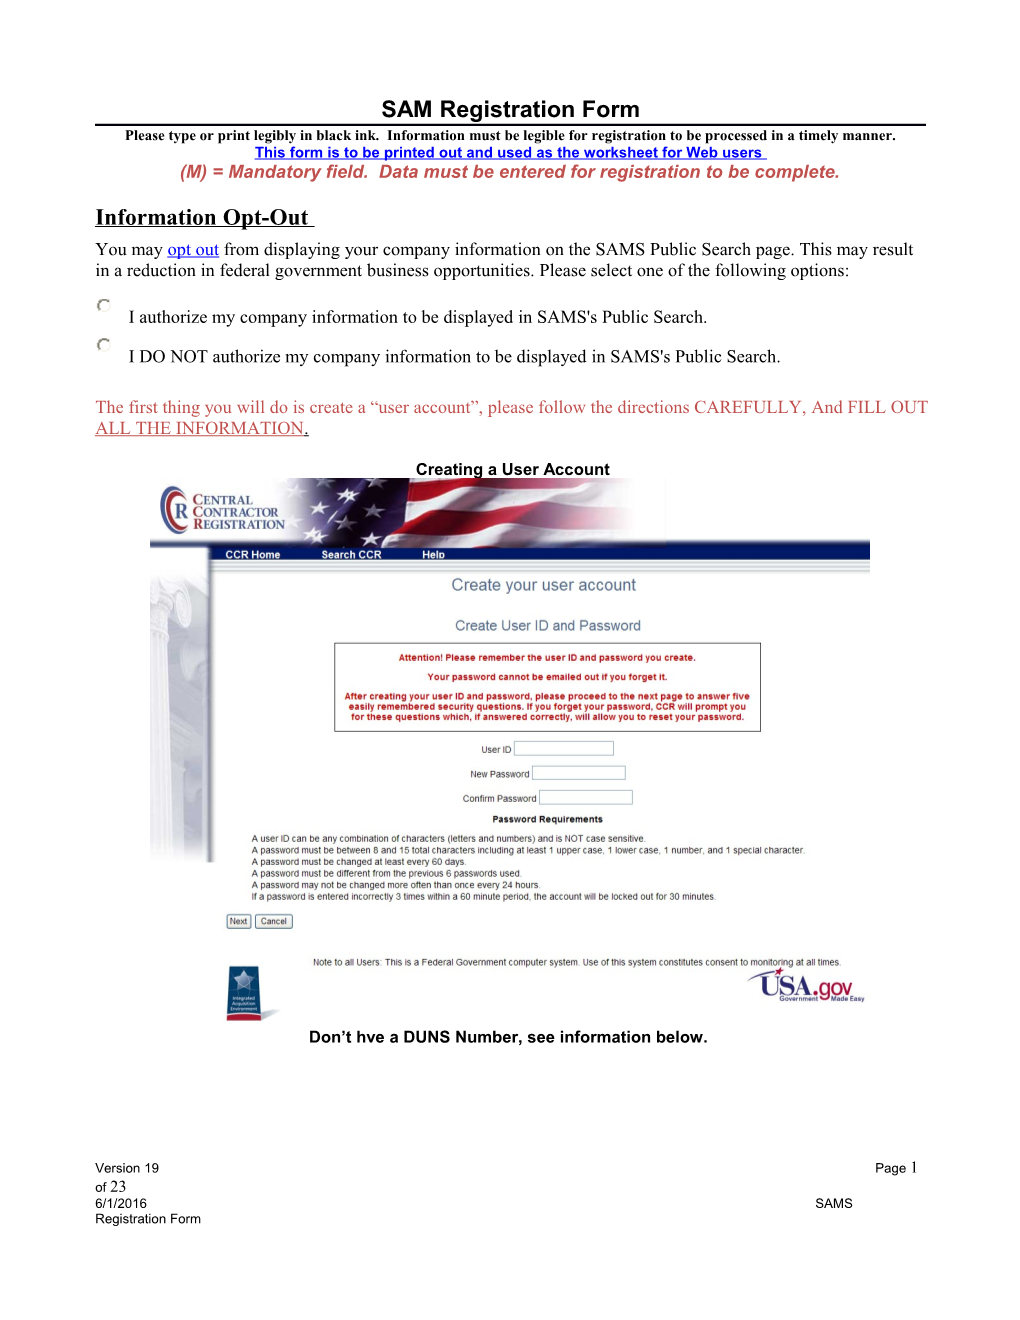 Central Contractor Registration Form